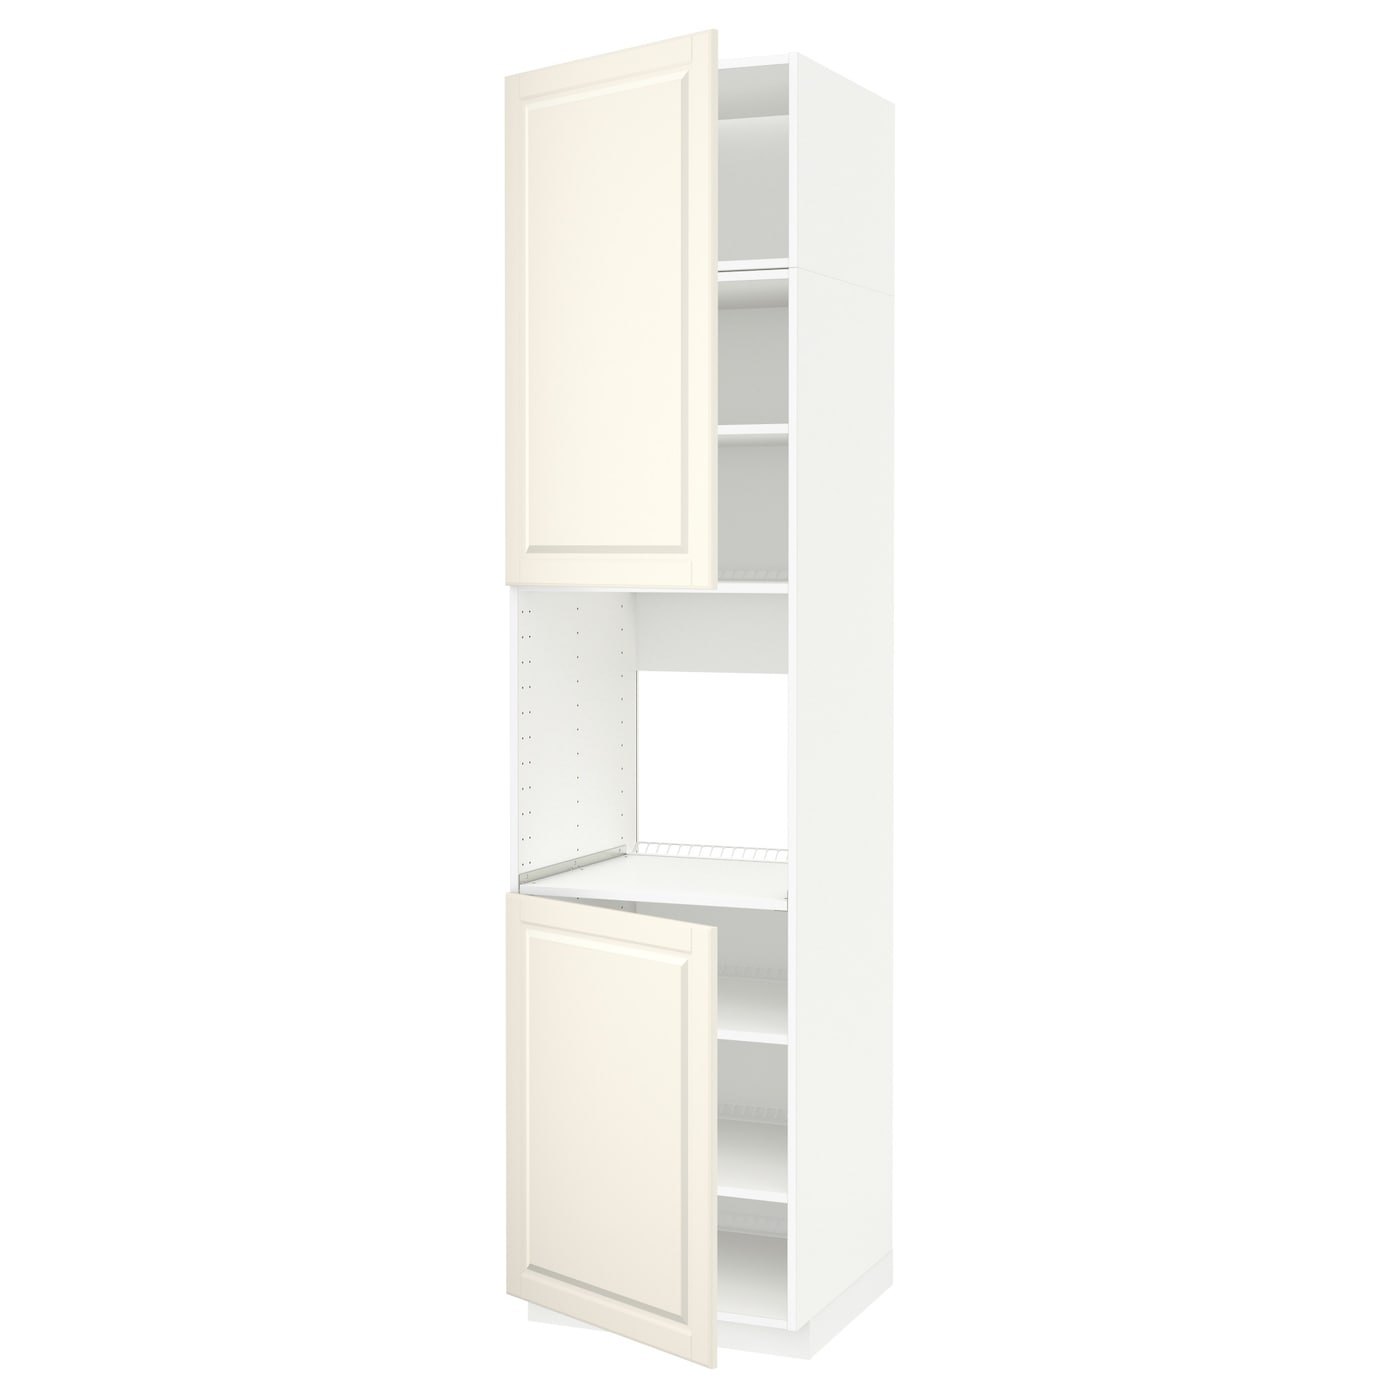 Кухонный шкаф-пенал - IKEA METOD/МЕТОД ИКЕА, 240х60х60 см, белый/кремовый